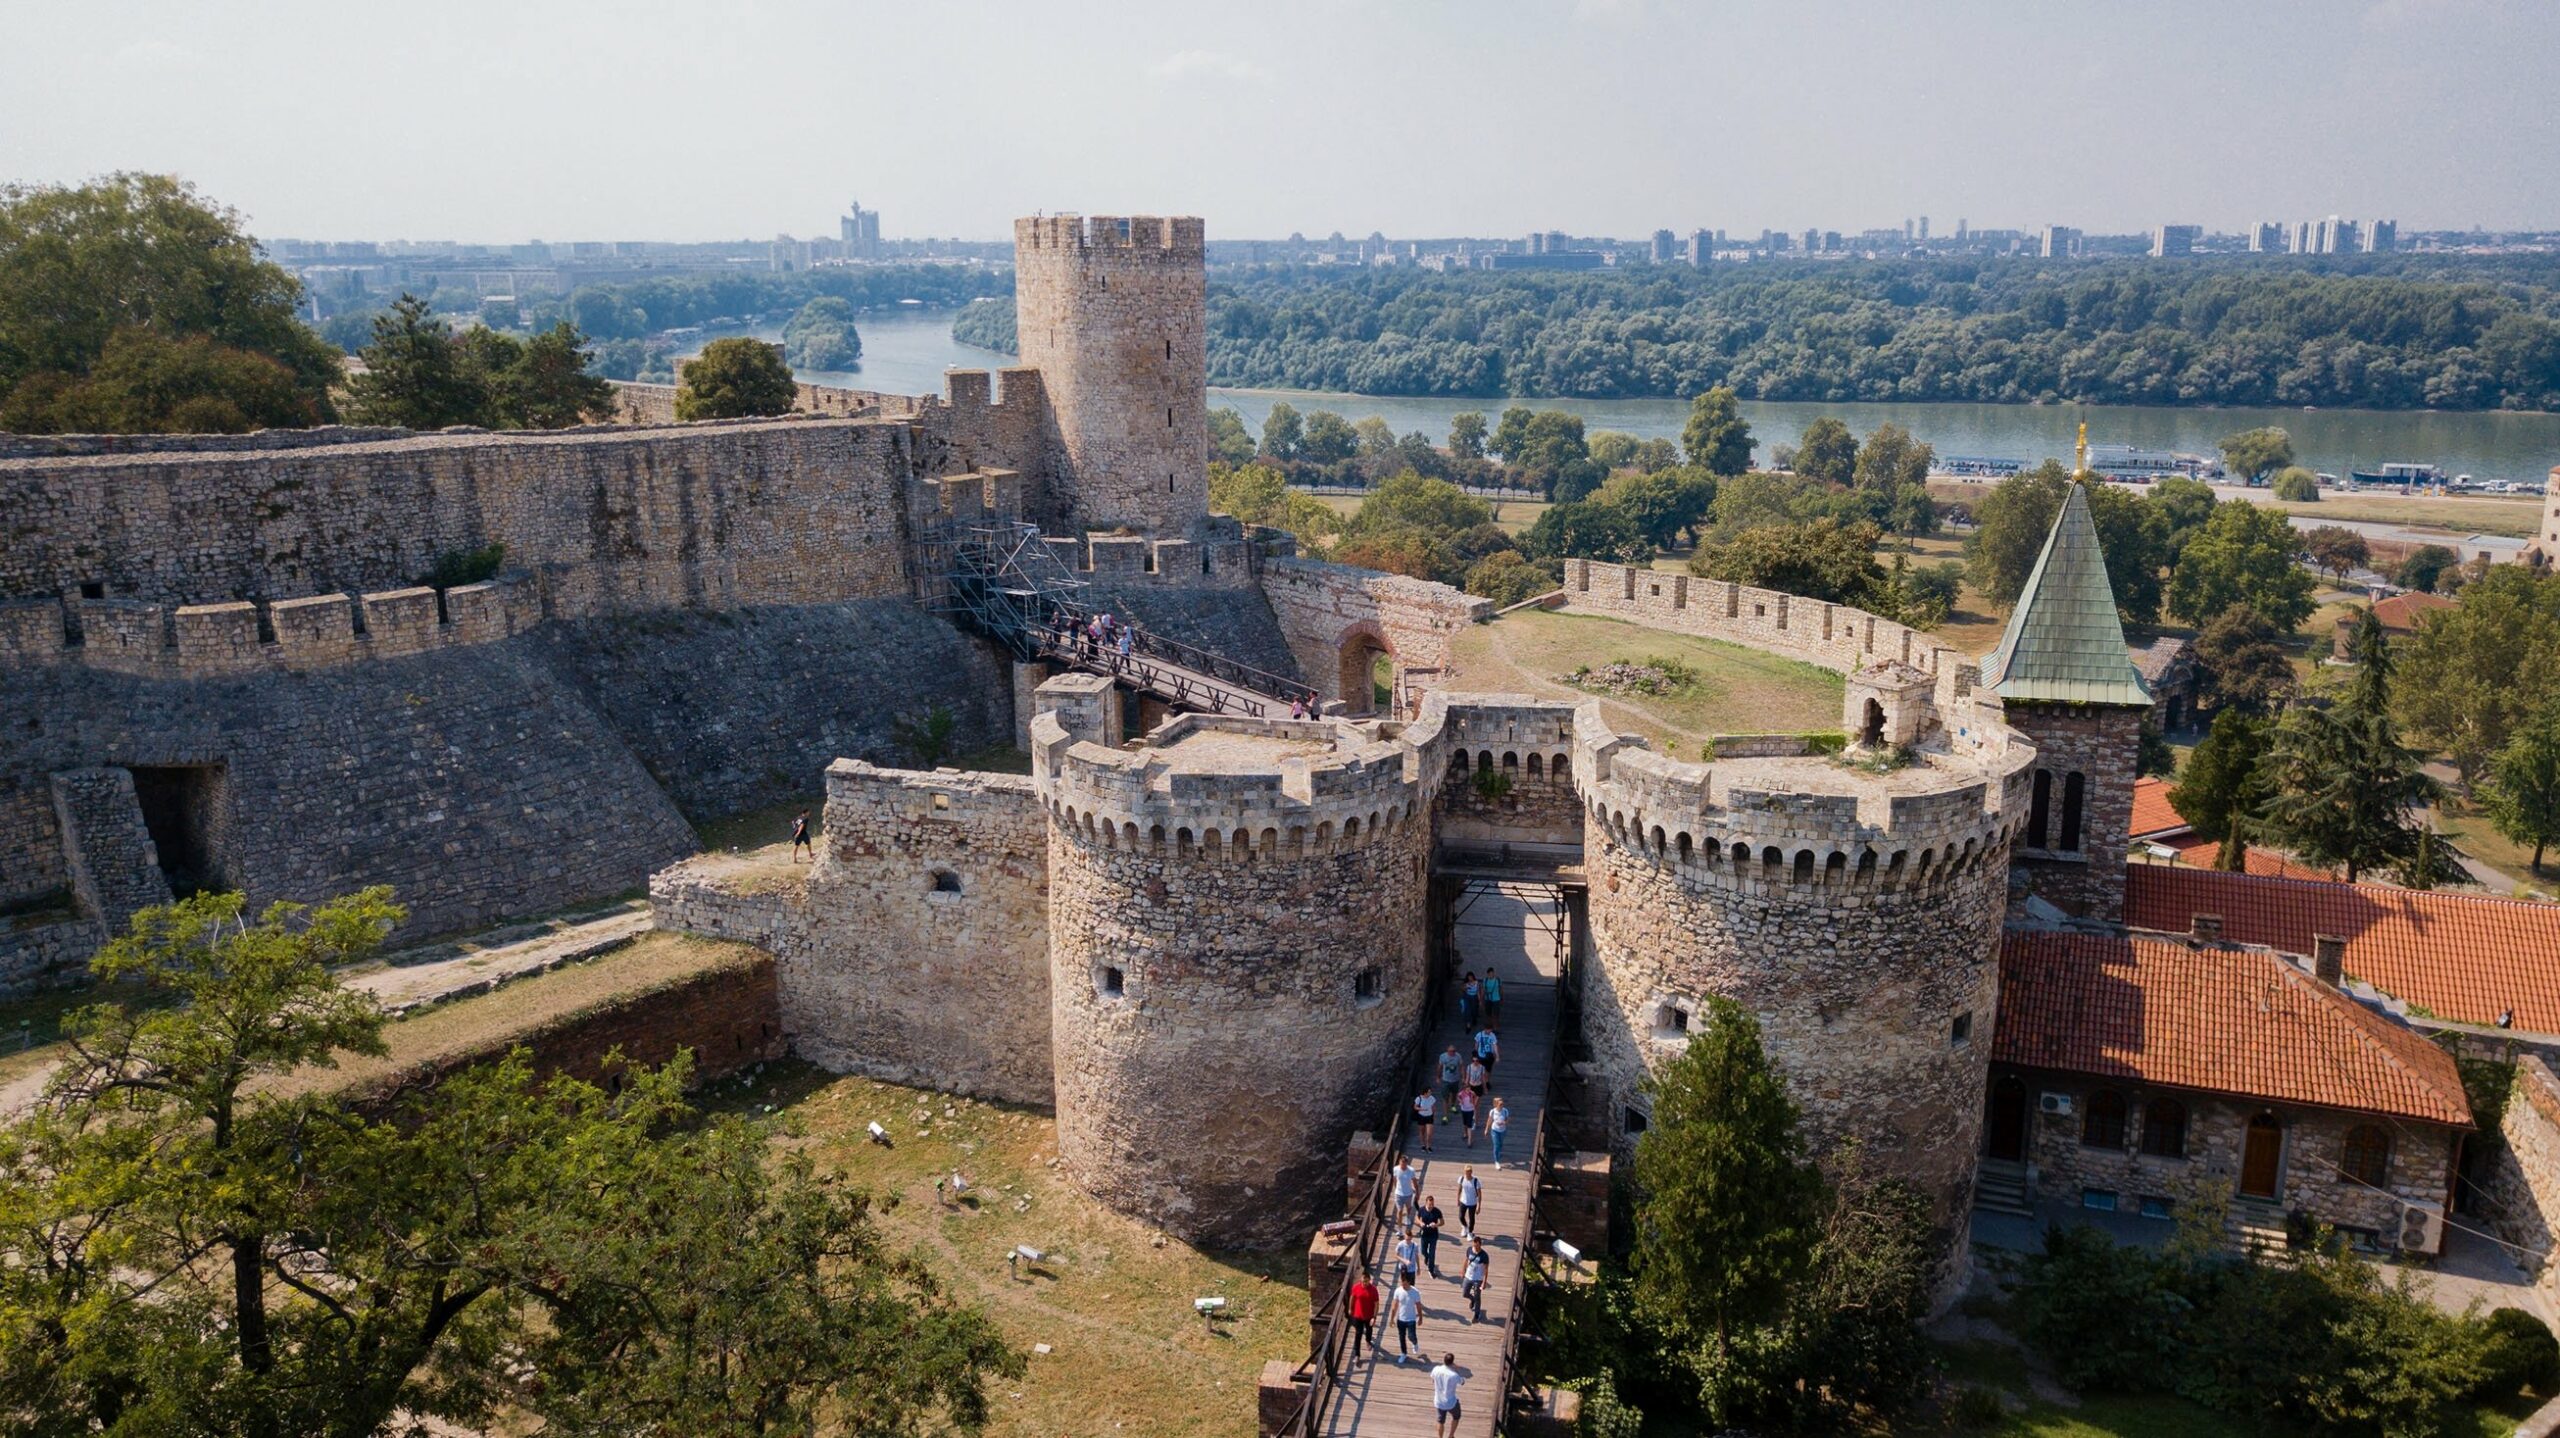 Belgrade Fortress and Kalemegdan Park, Belgrade, Serbia. Source: theartnewspaper.com, © Mykhailo Brodskyi